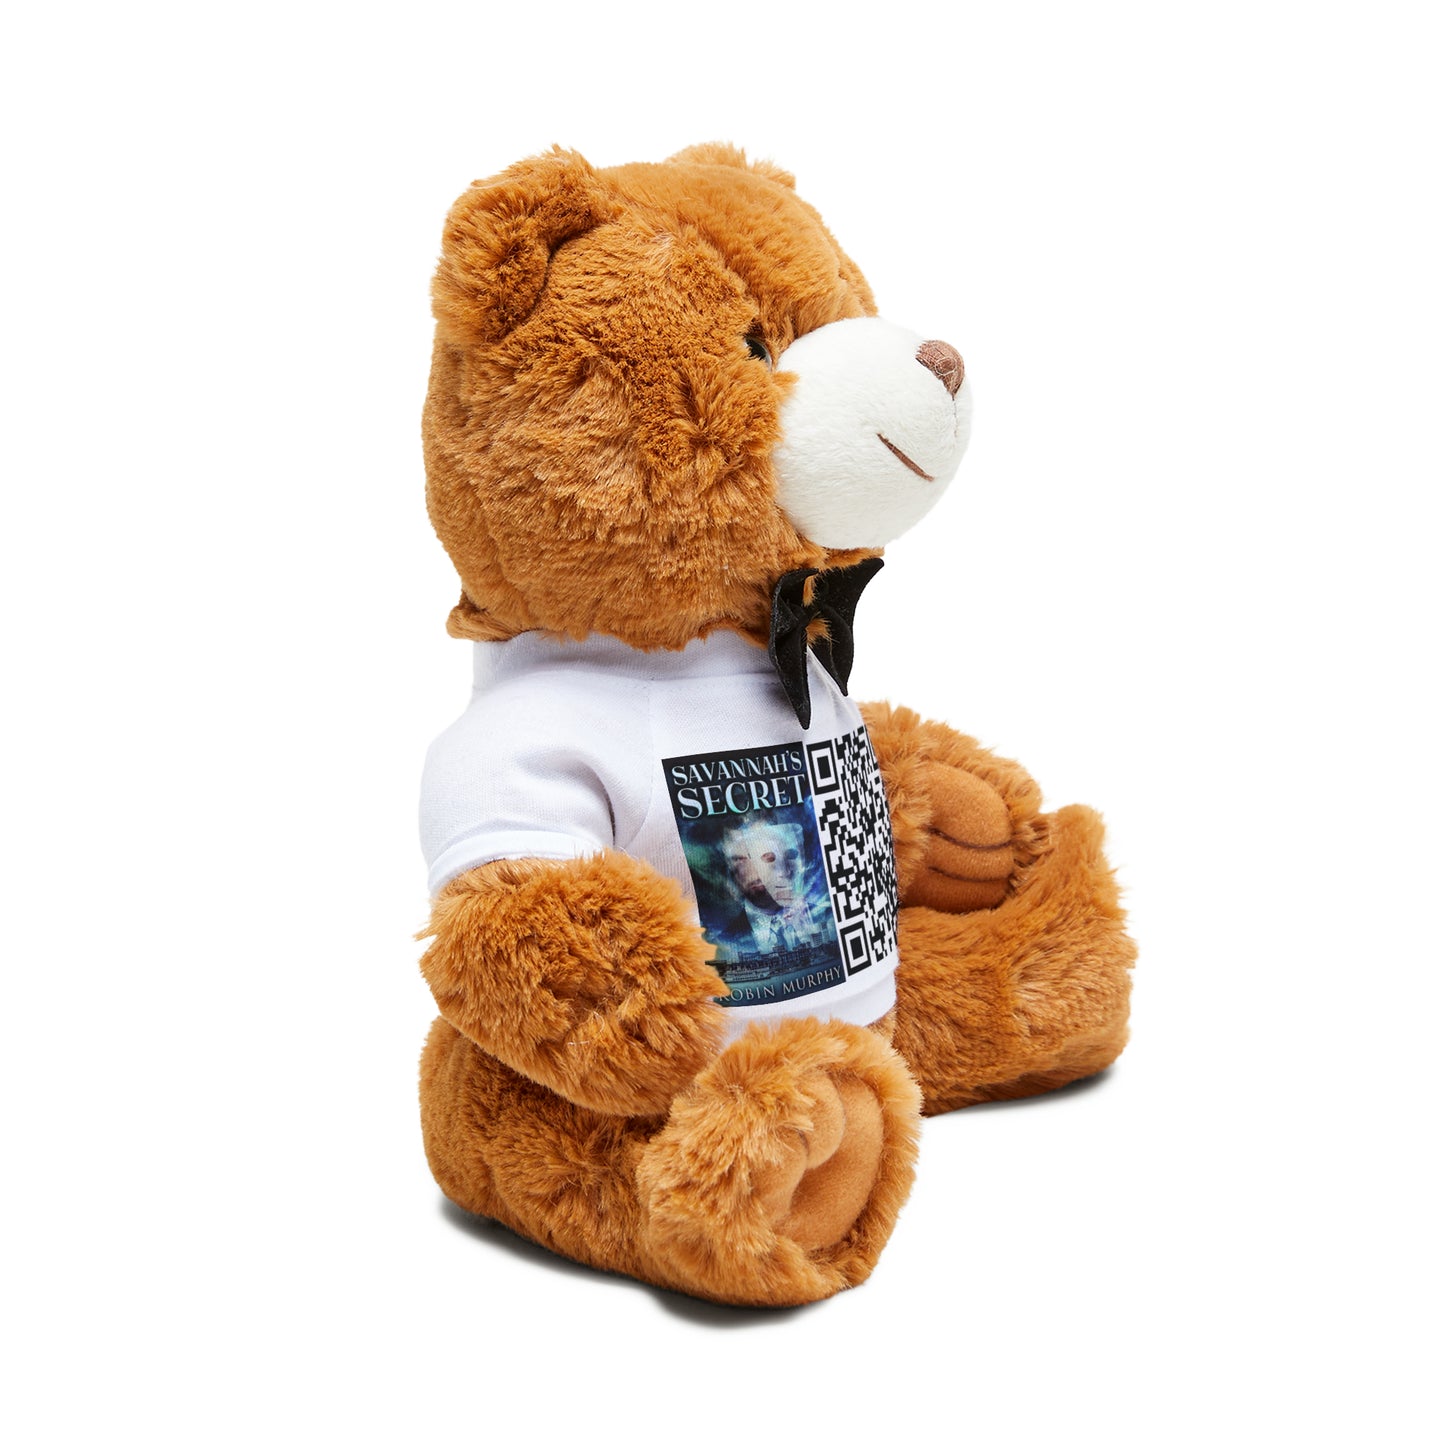 Savannah's Secret - Teddy Bear